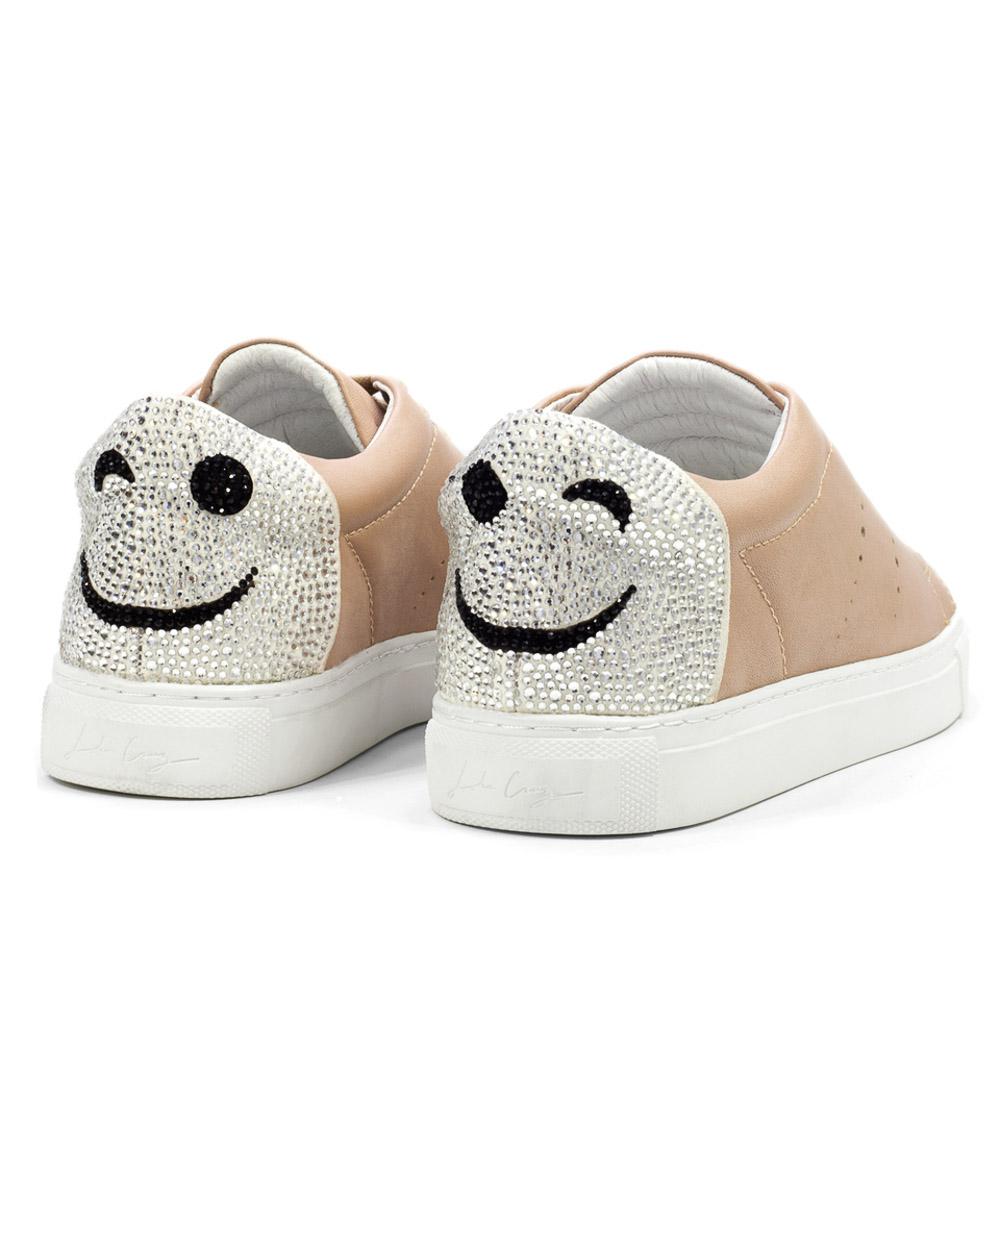 lola cruz sneakers smiley face off 65% - www.hidrogrup.com.tr